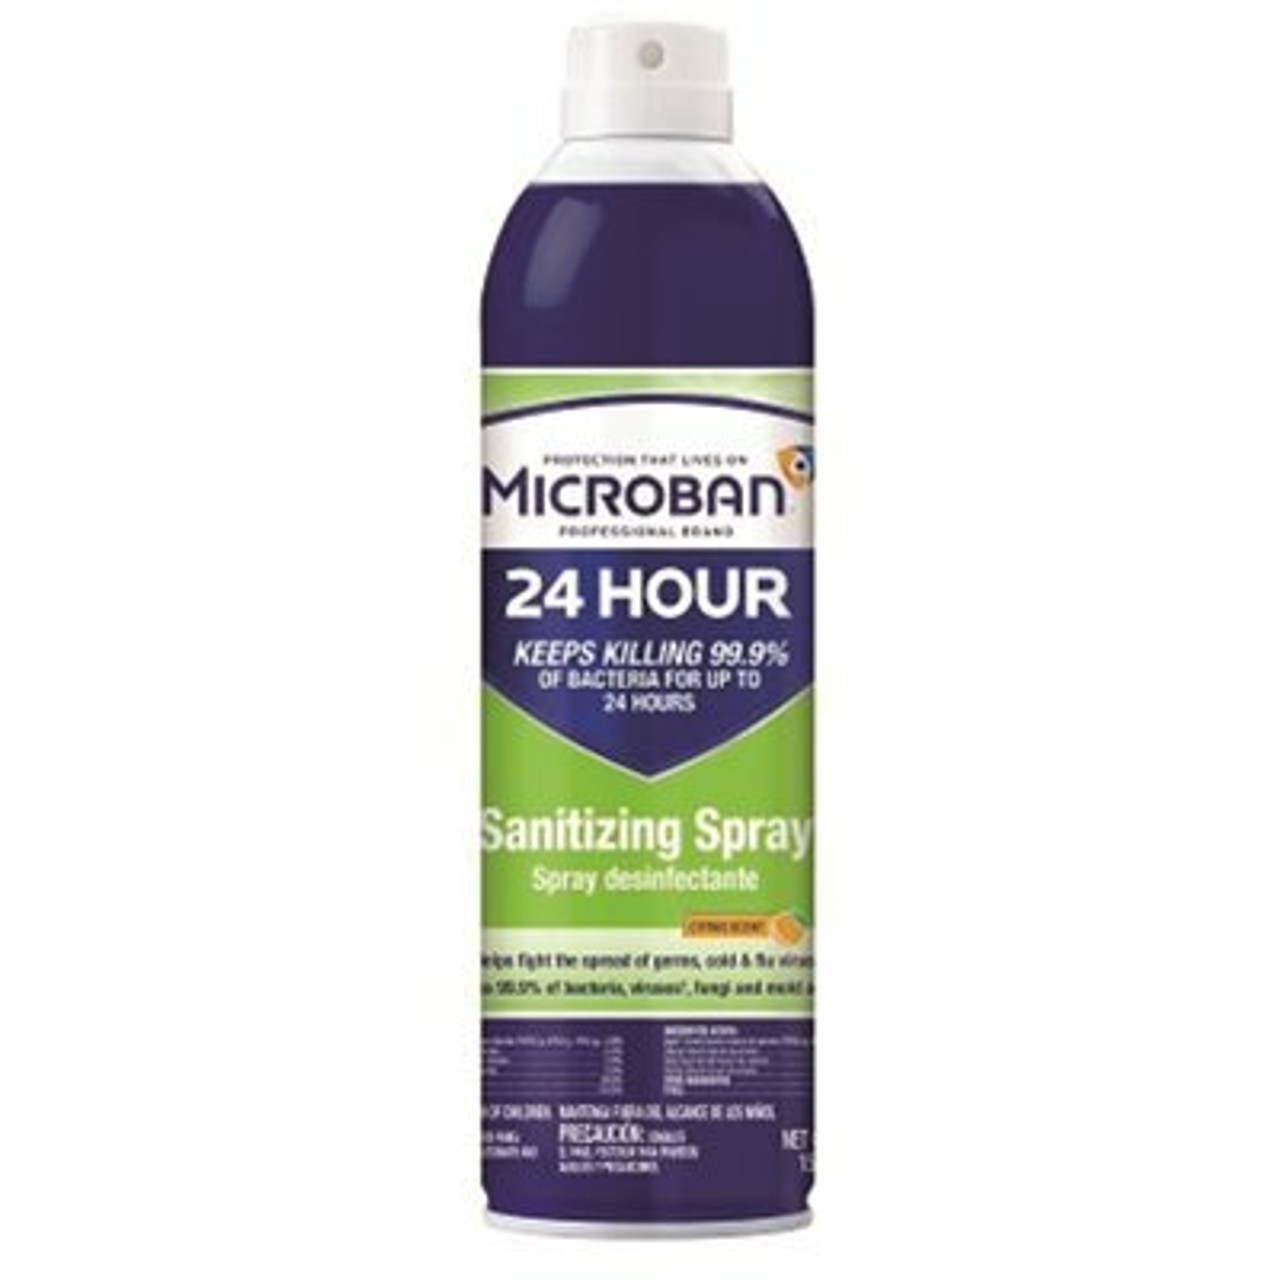 Microban Professional 24-Hour 15 Oz. Sanitizing Spray, Citrus Scent